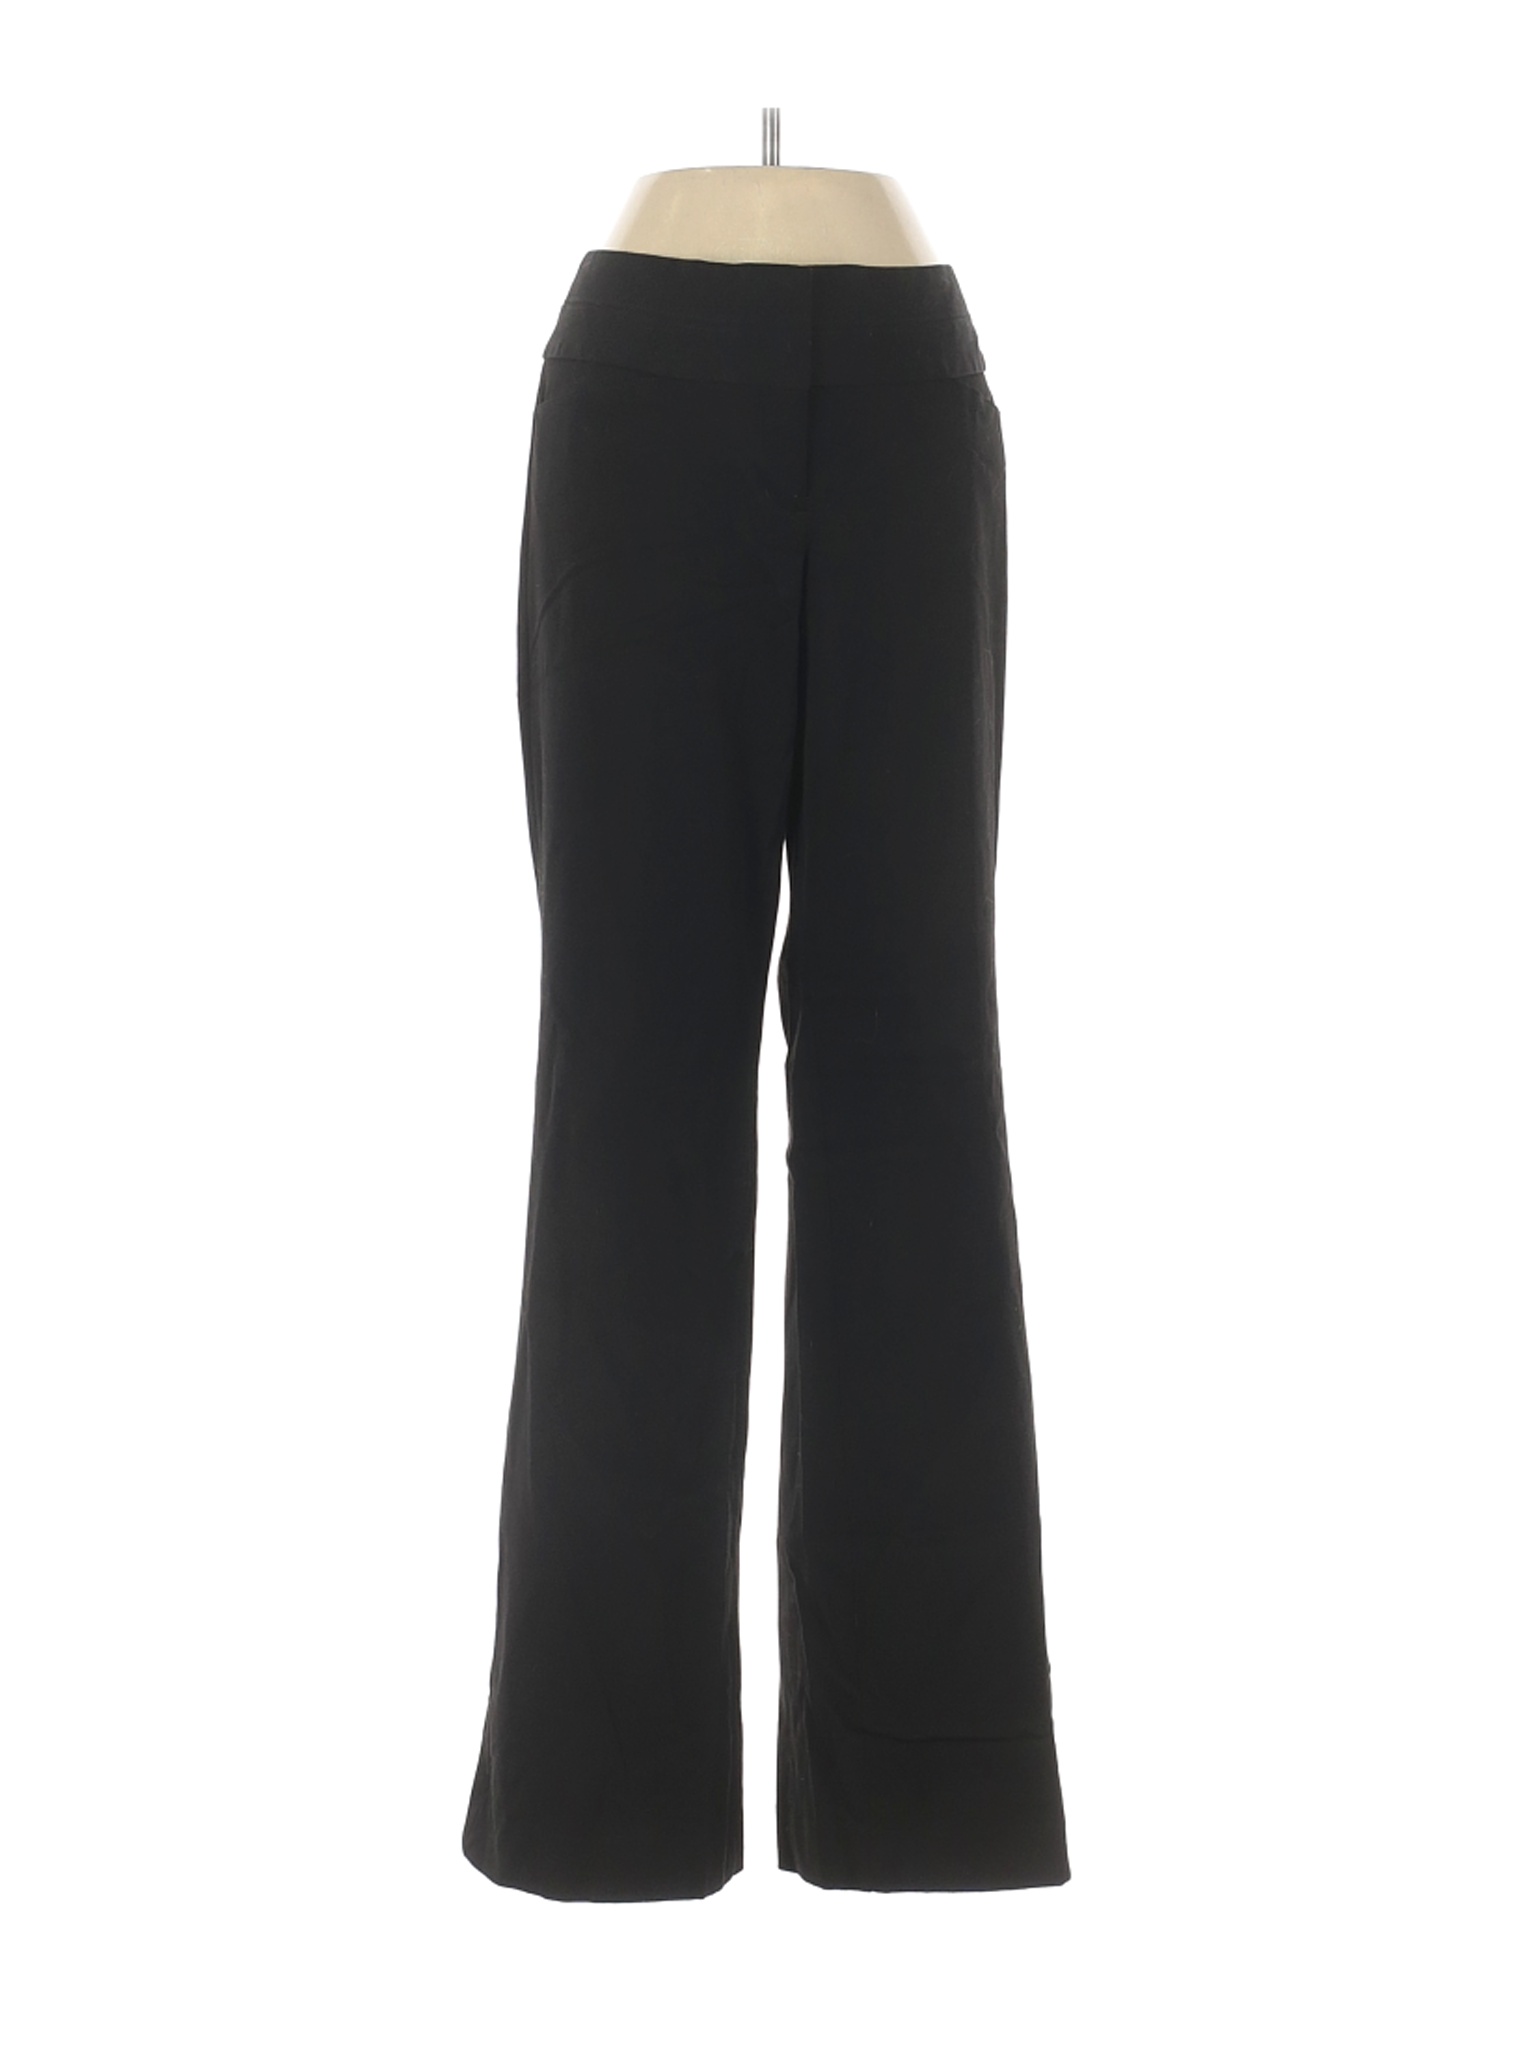 Express Women Black Dress Pants 4 | eBay